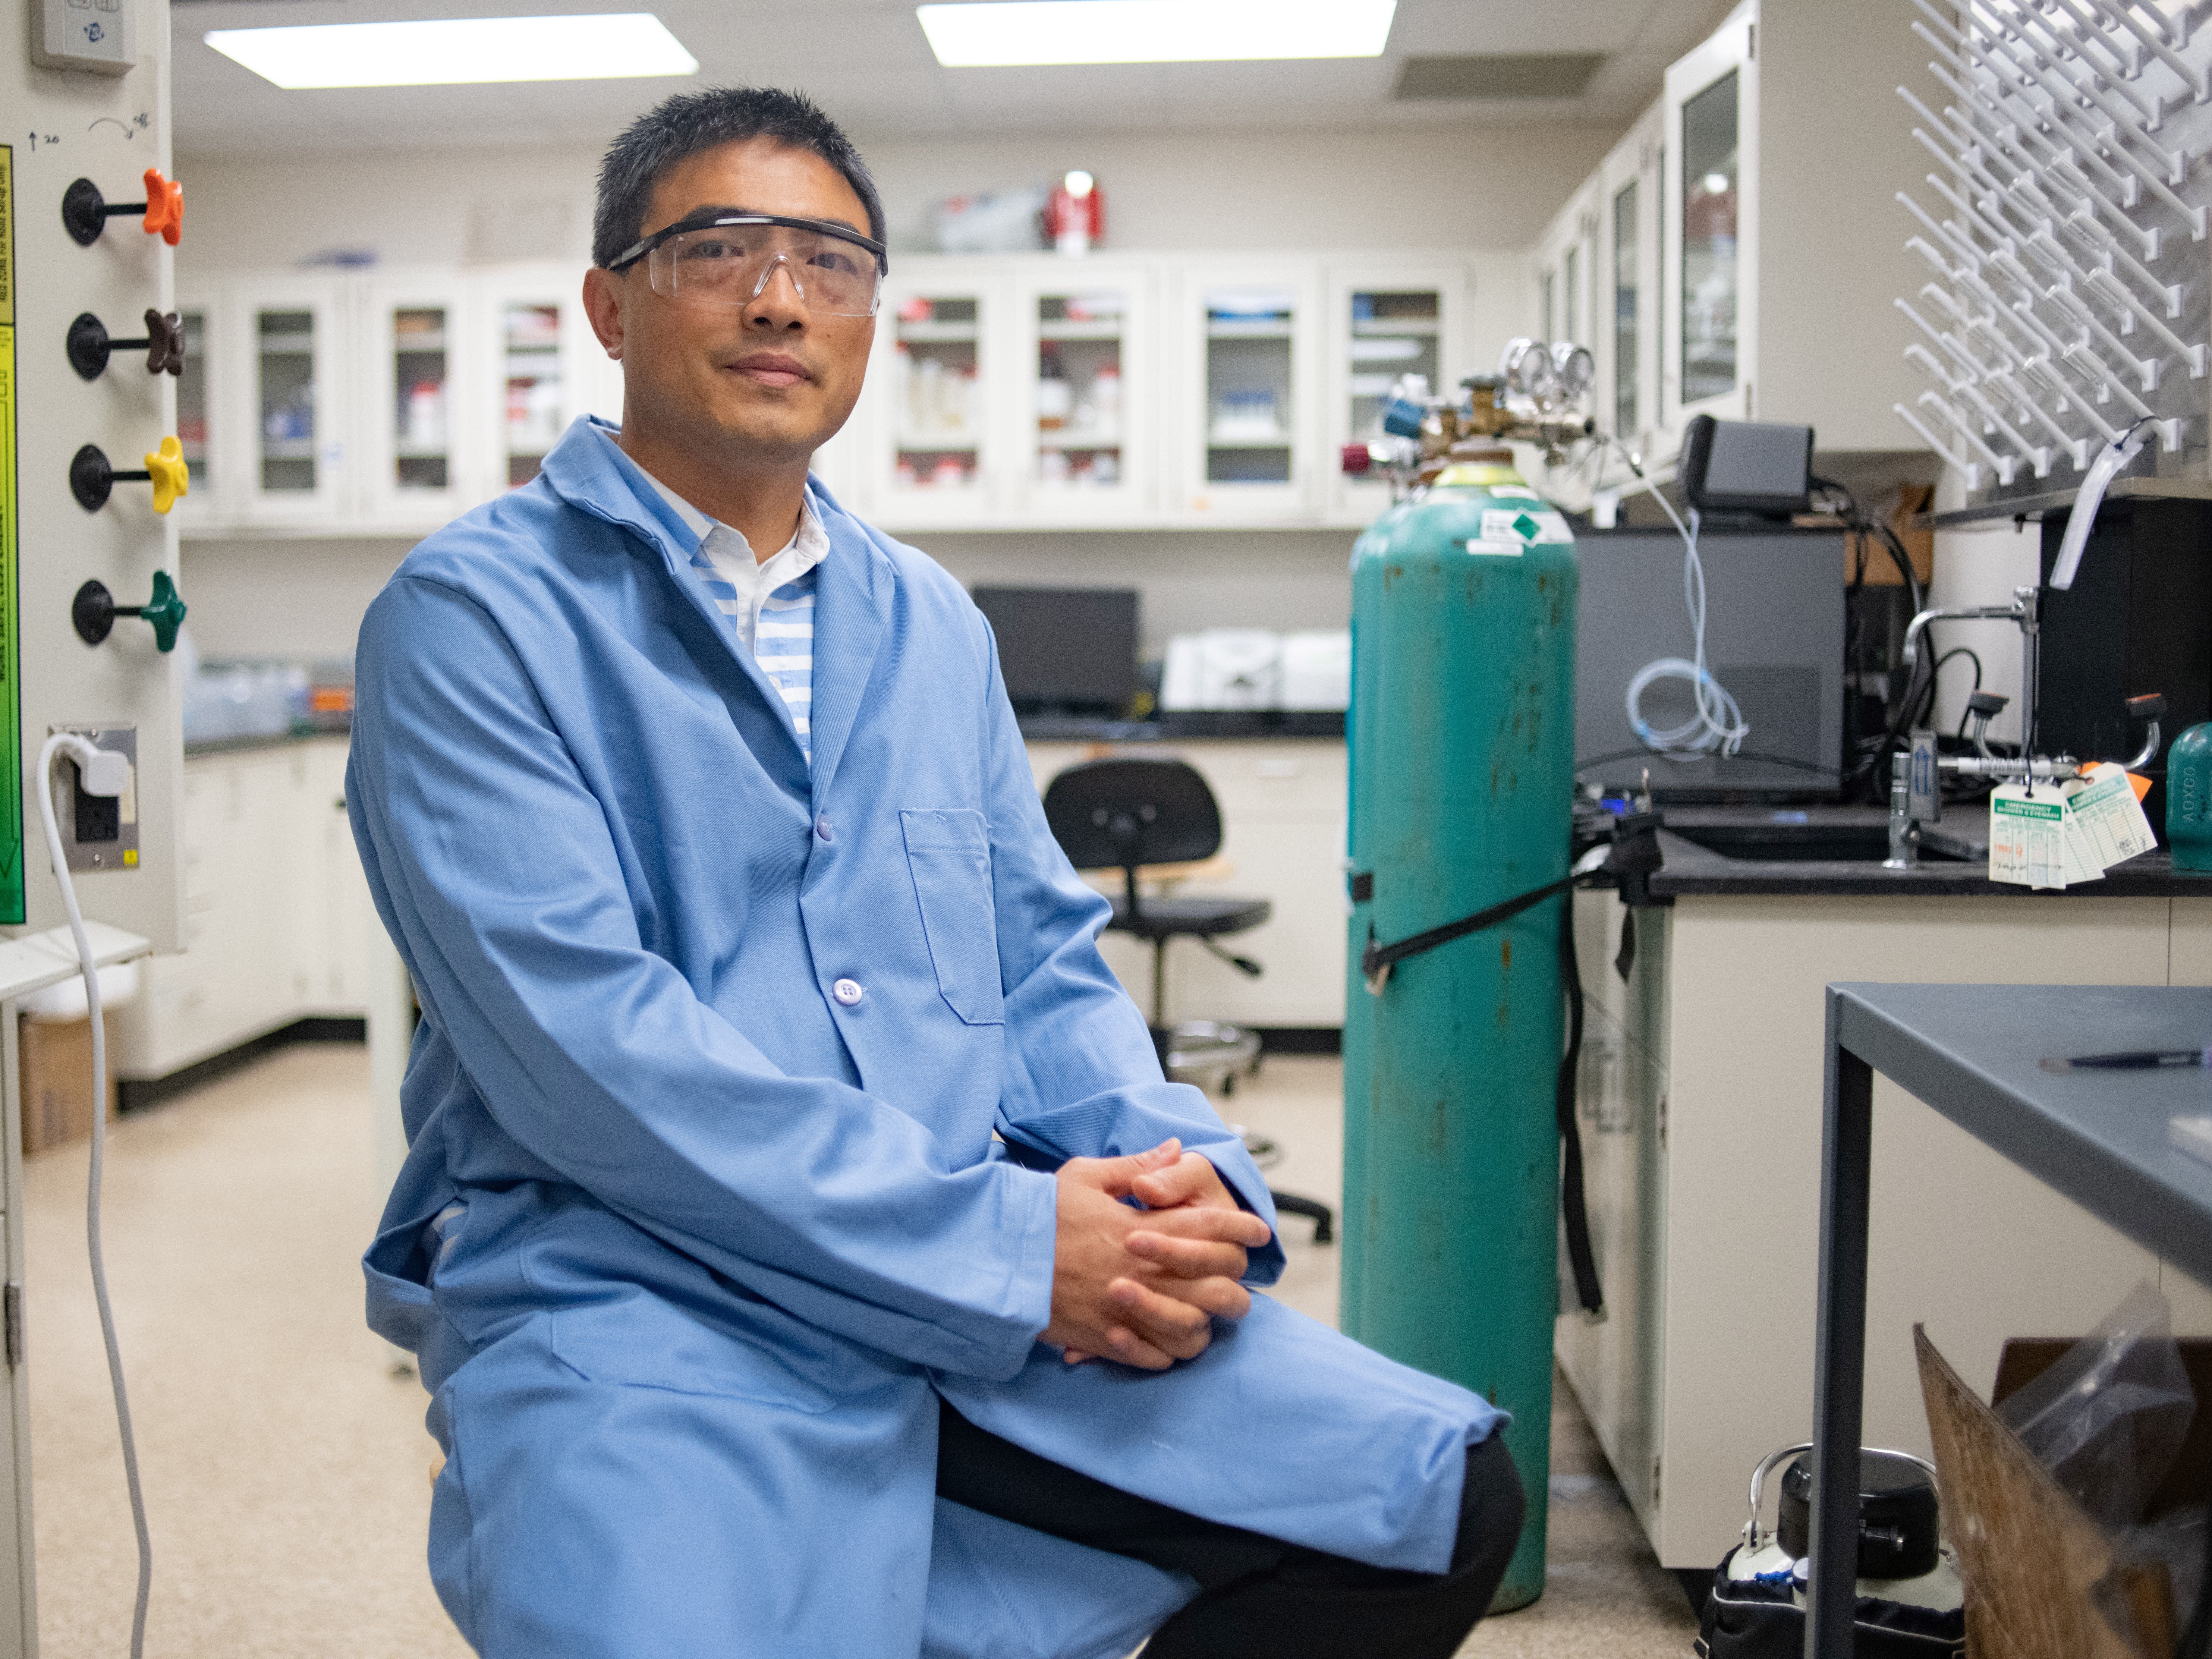 UT Austin Texas engineering professor Guihua Yu smiling in his research lab